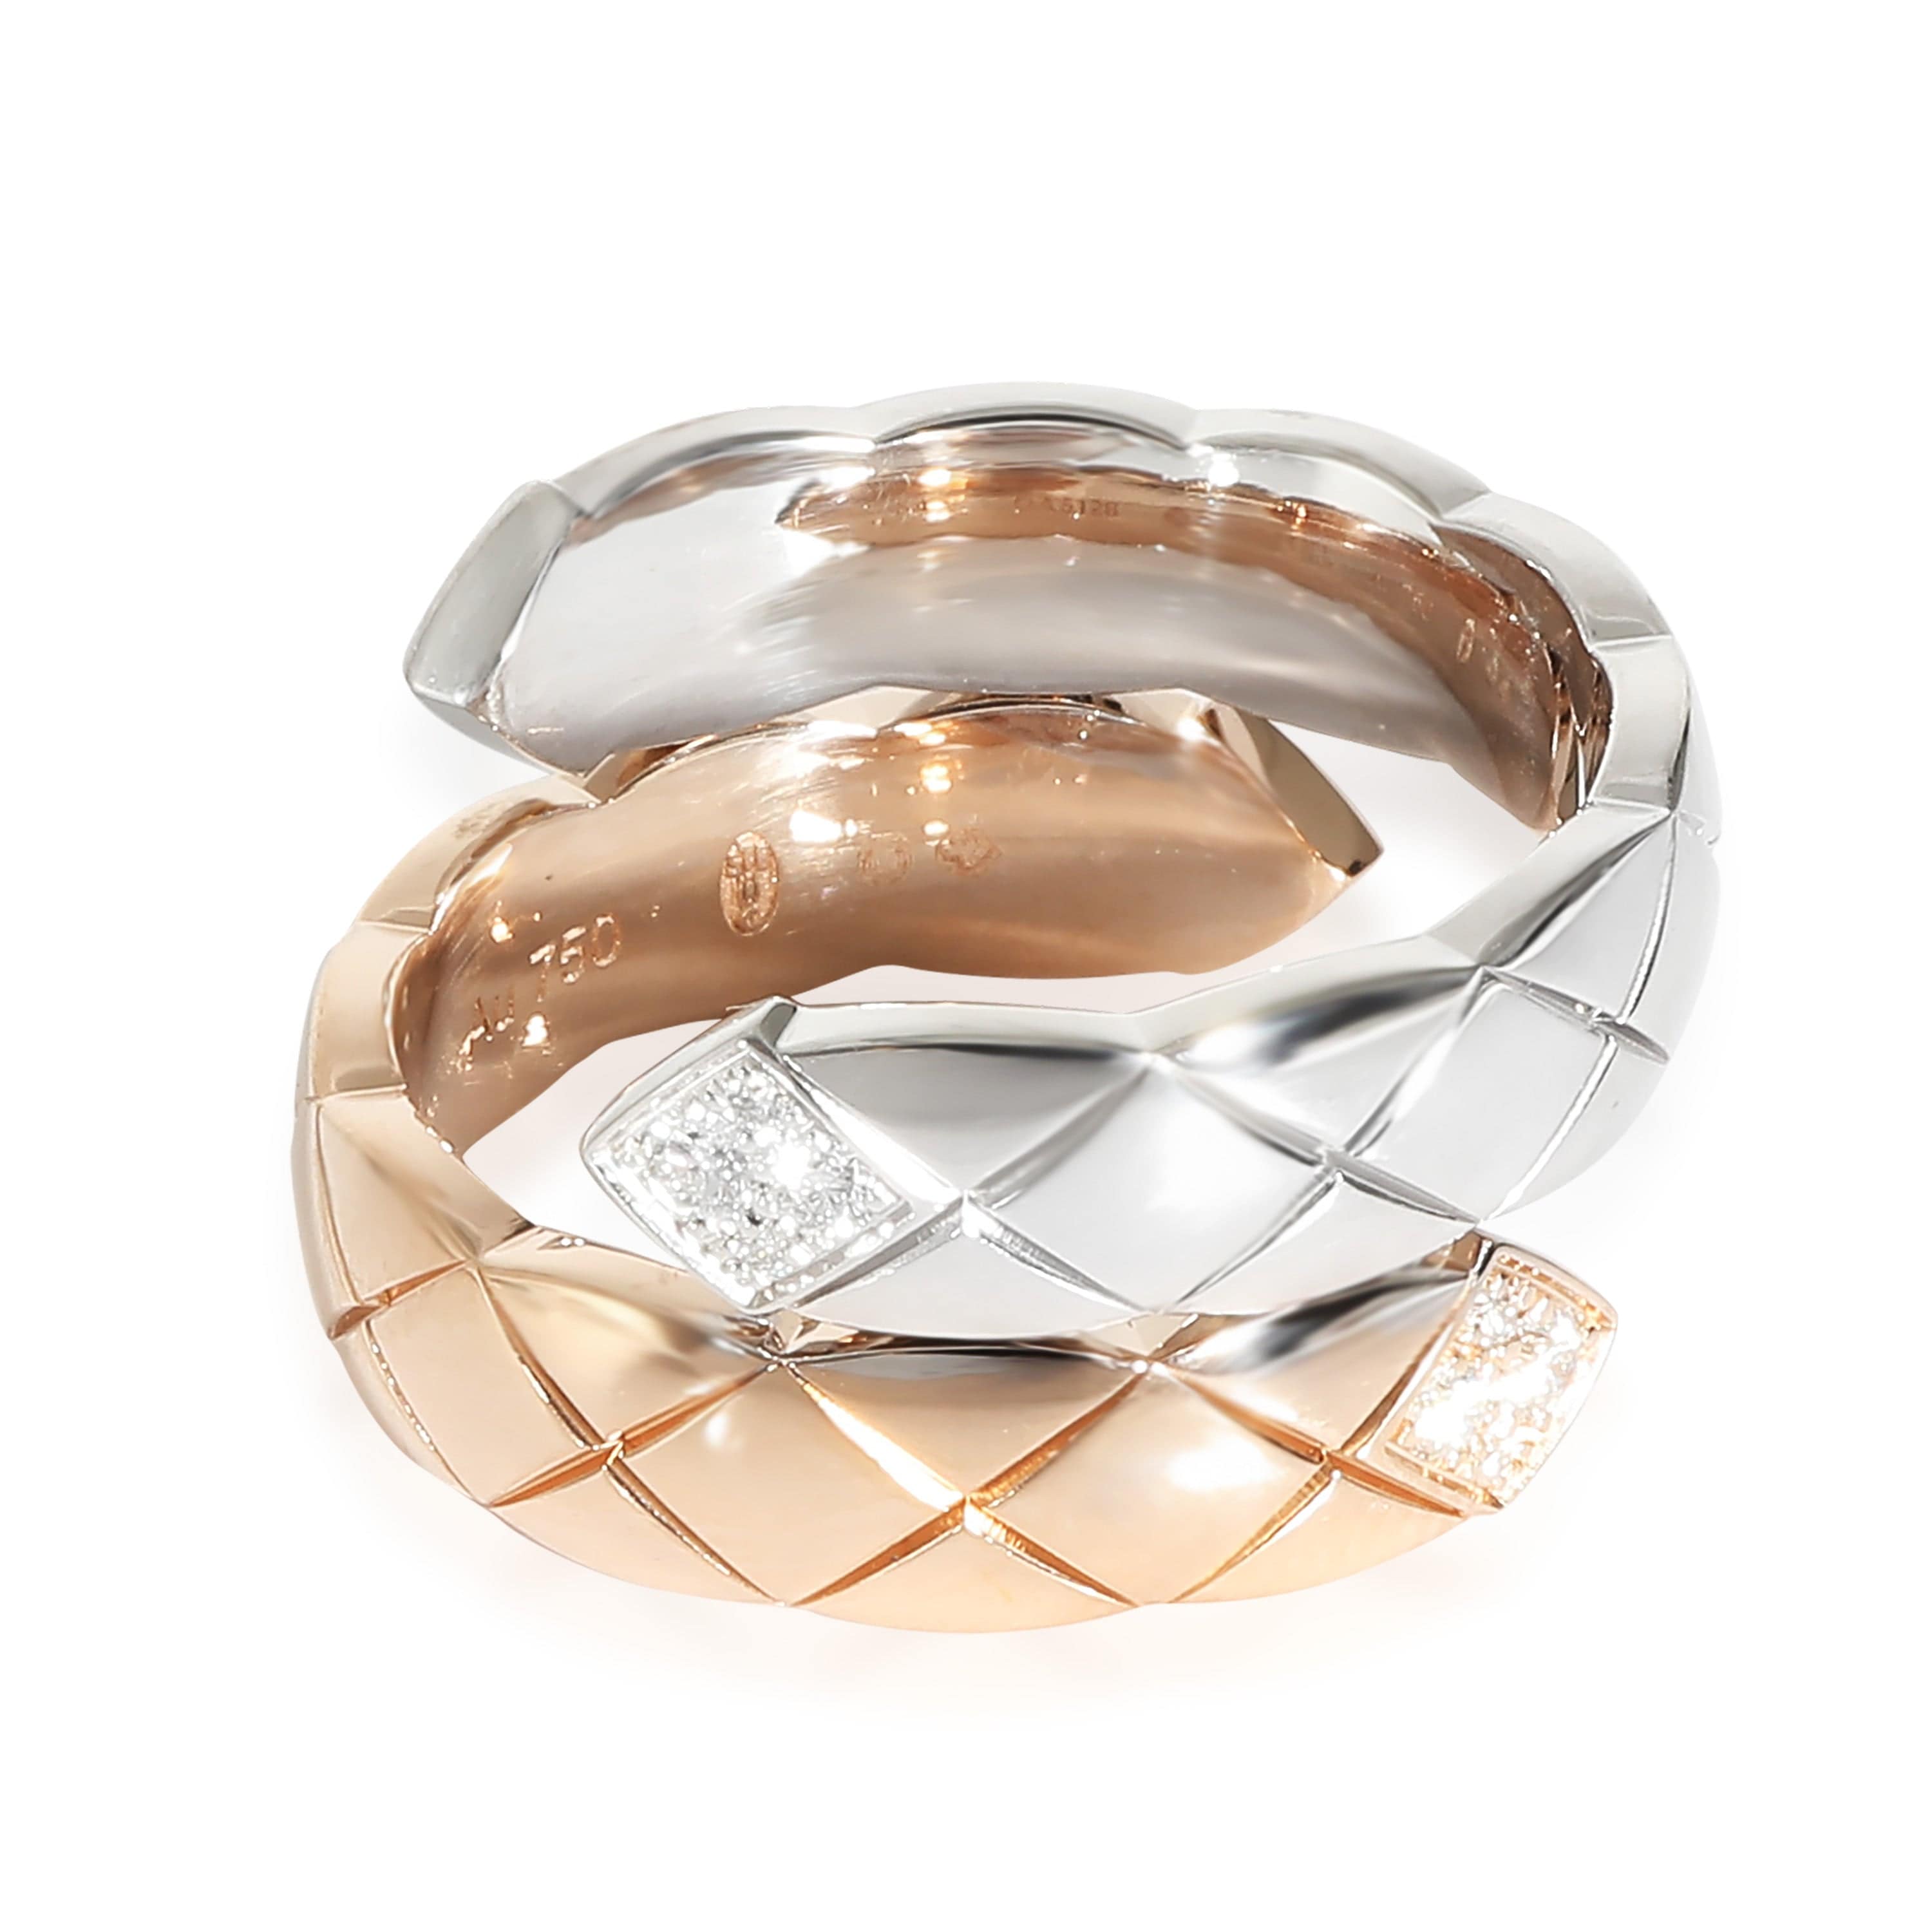 Chanel Chanel Coco Crush Diamond Ring in 18k 2 Tone Gold 0.1 CTW